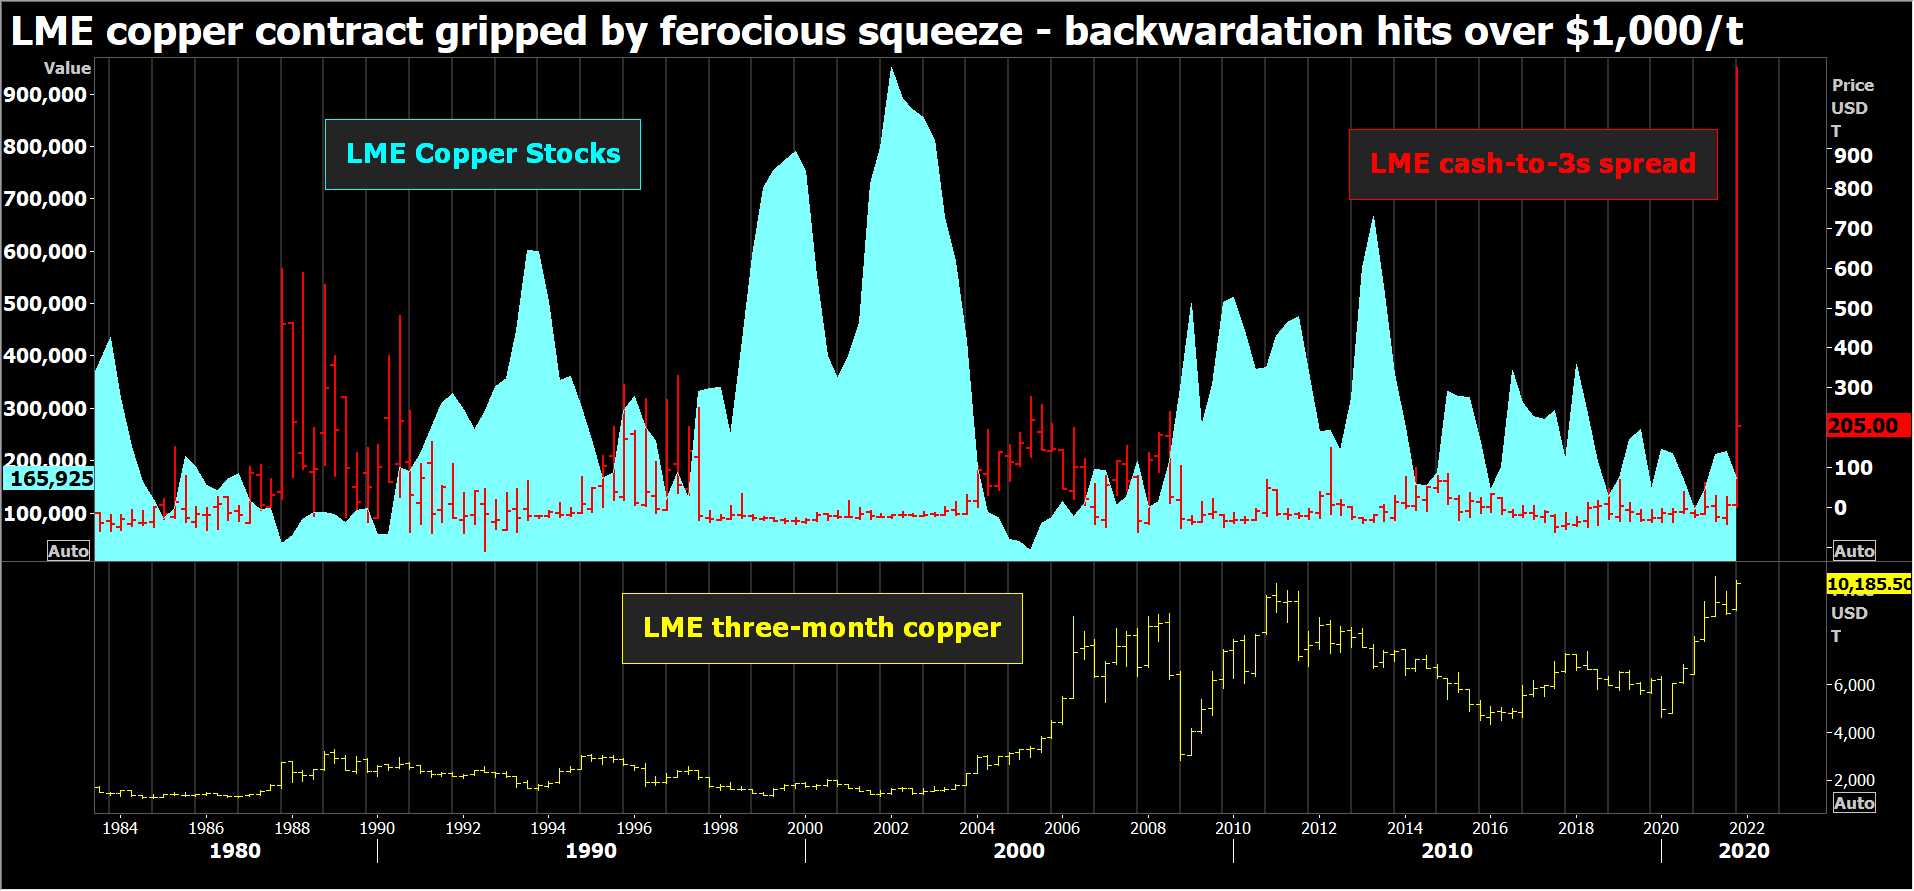 LME stocks, price and cash-3s spread